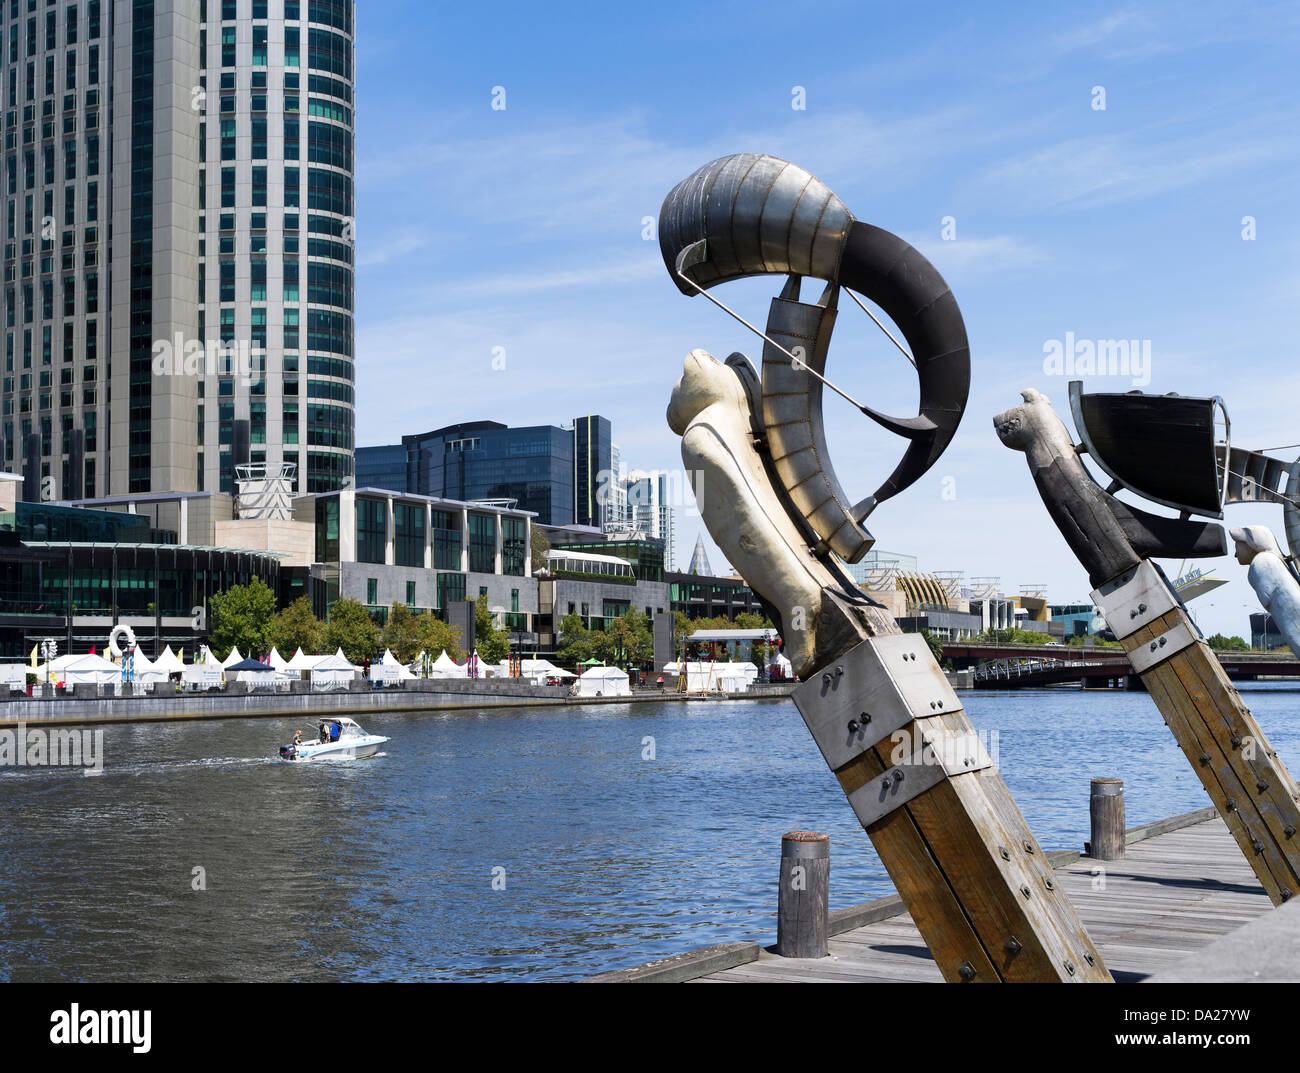 dh Yarra River MELBOURNE AUSTRALIA Pleasure boat decorative riverside sculptures artwork art sculpture Stock Photo